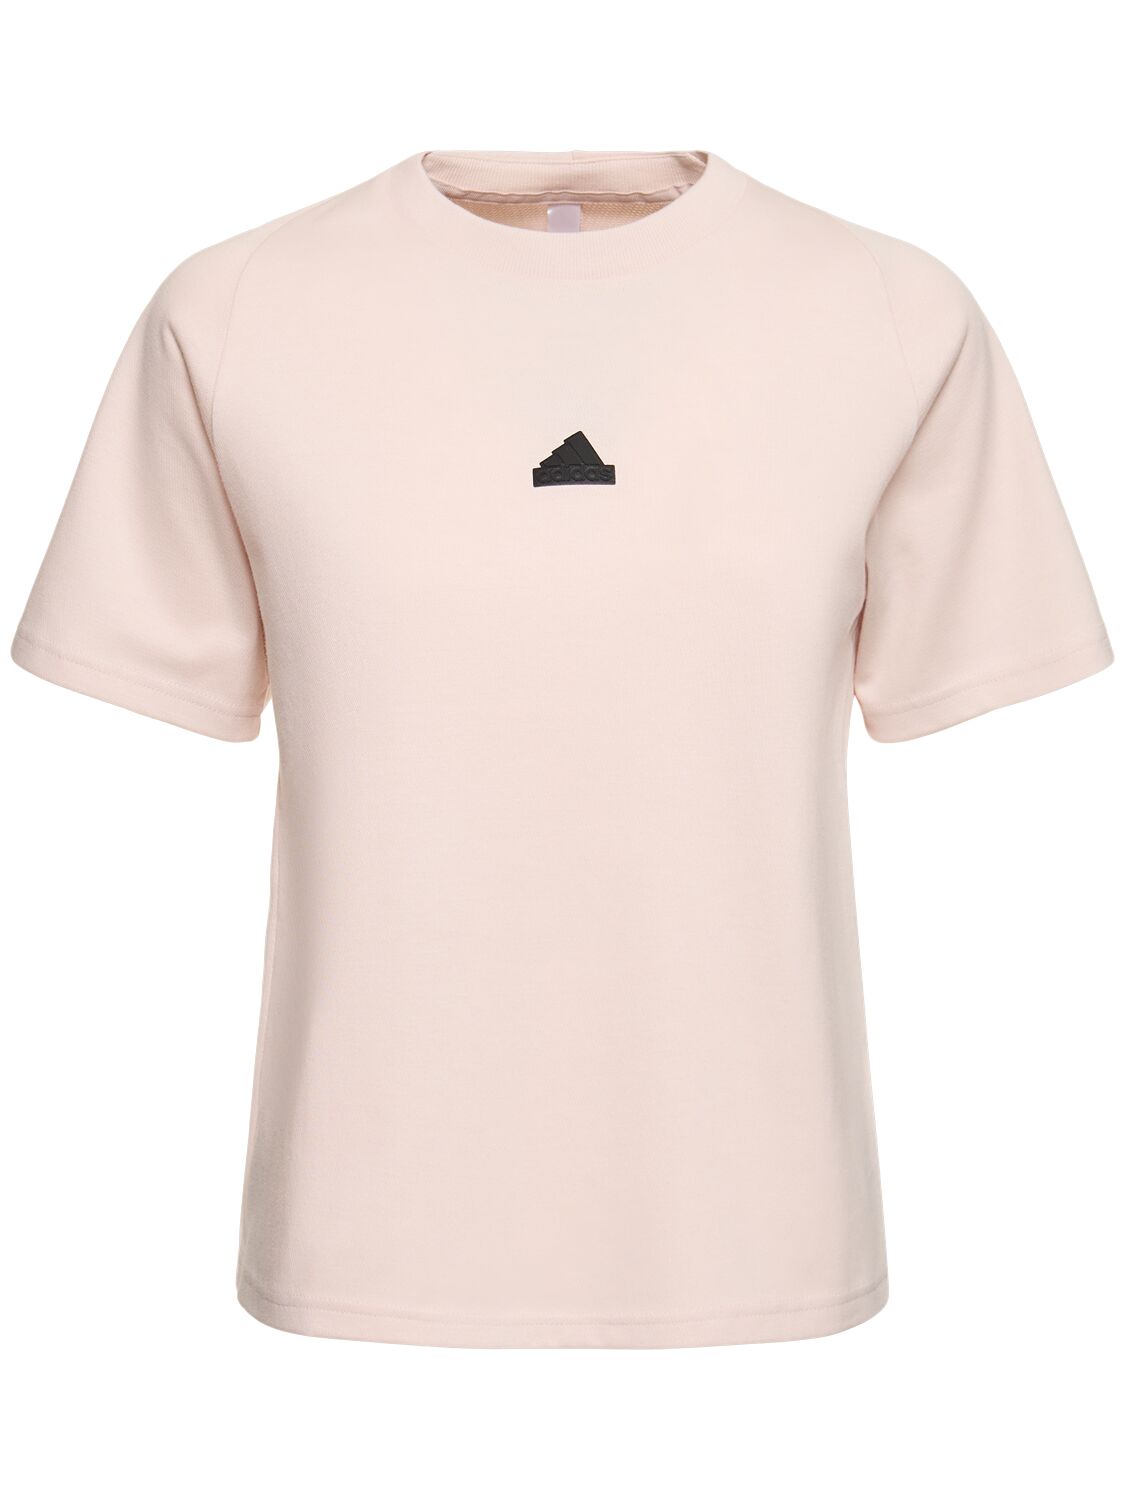 Adidas Originals Zone T恤 In Pink